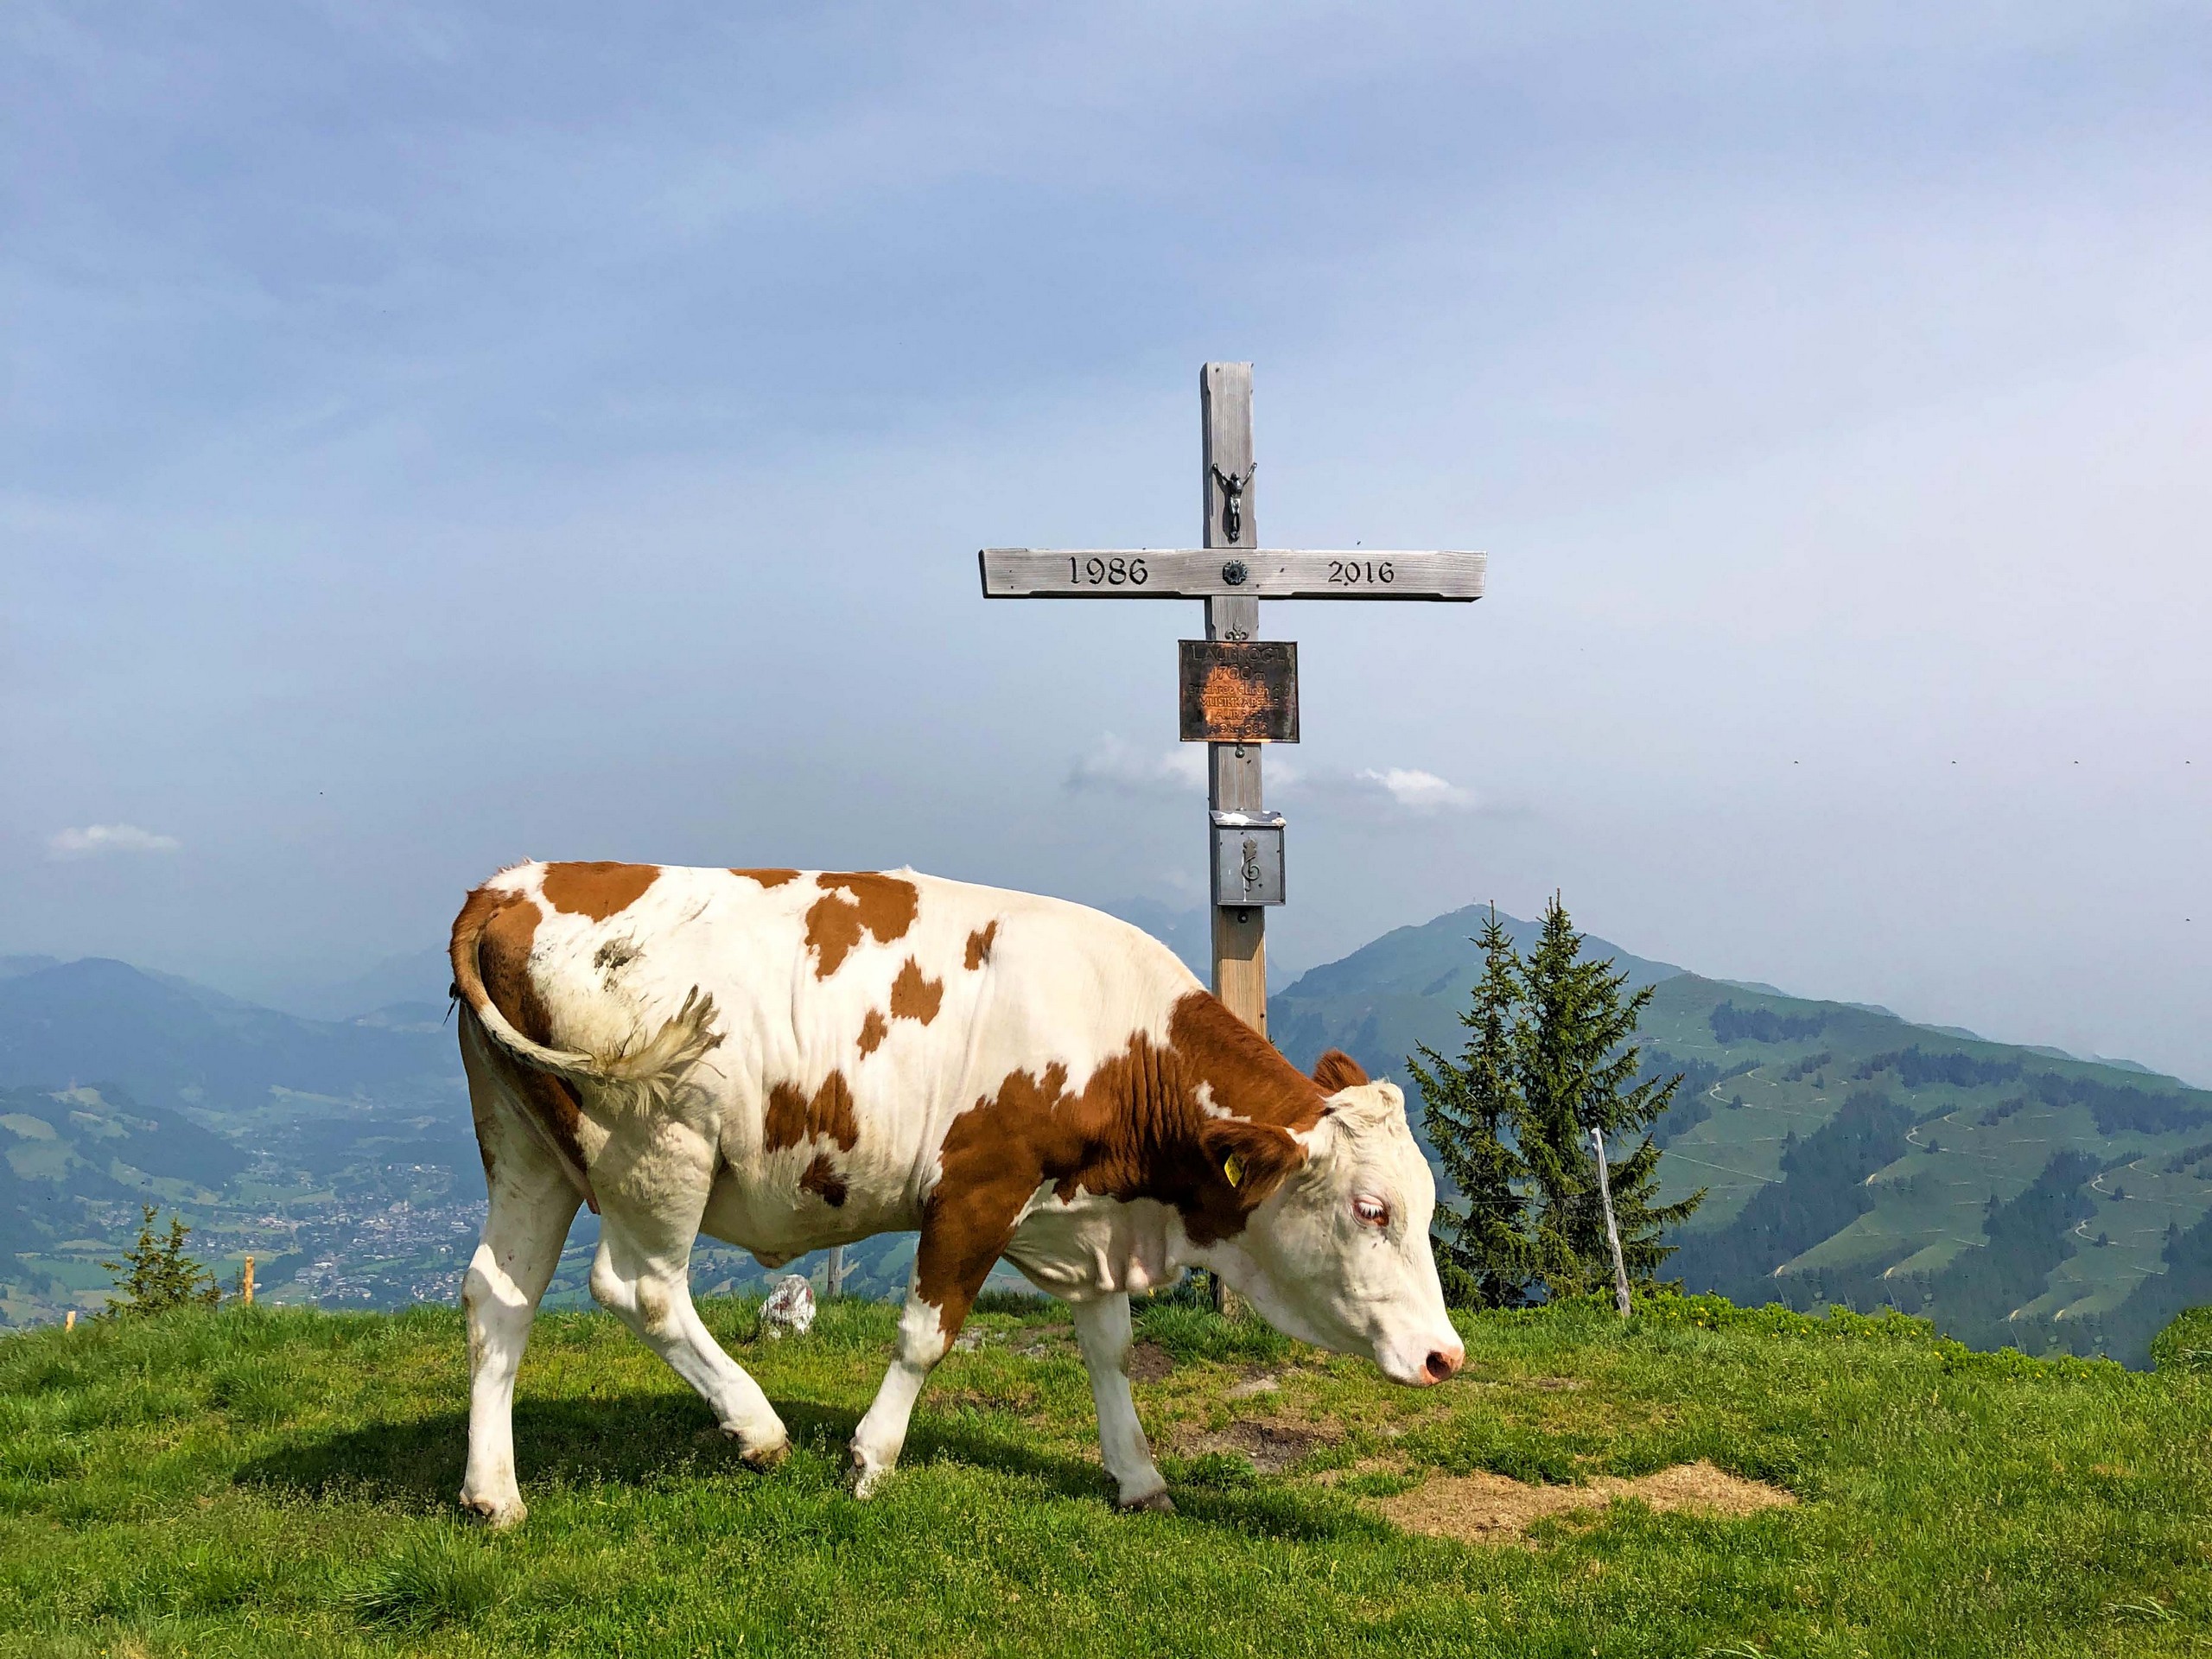 Cow met while trekking in Zell am See region in Austria